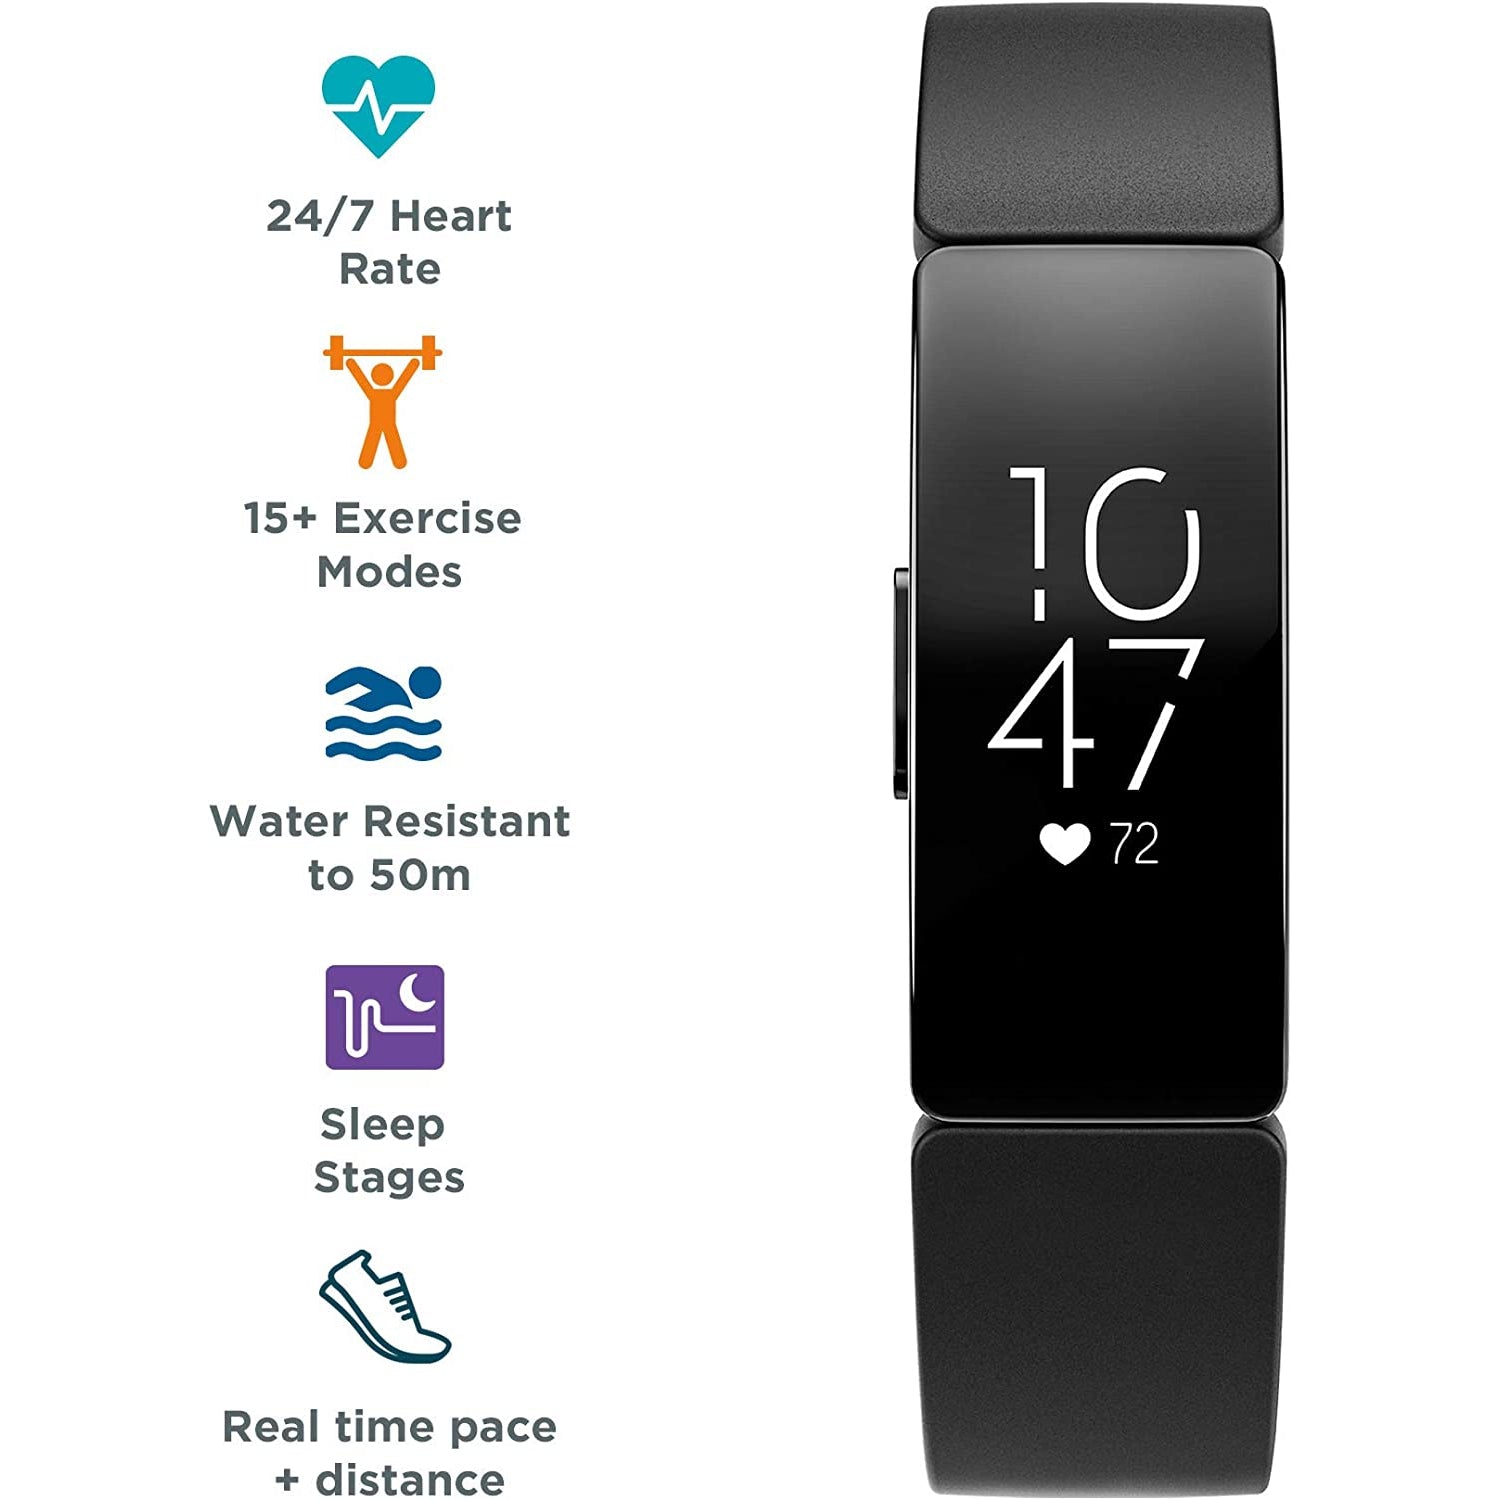 Fitbit Inspire HR Health & Fitness Tracker - Black - Refurbished Excellent